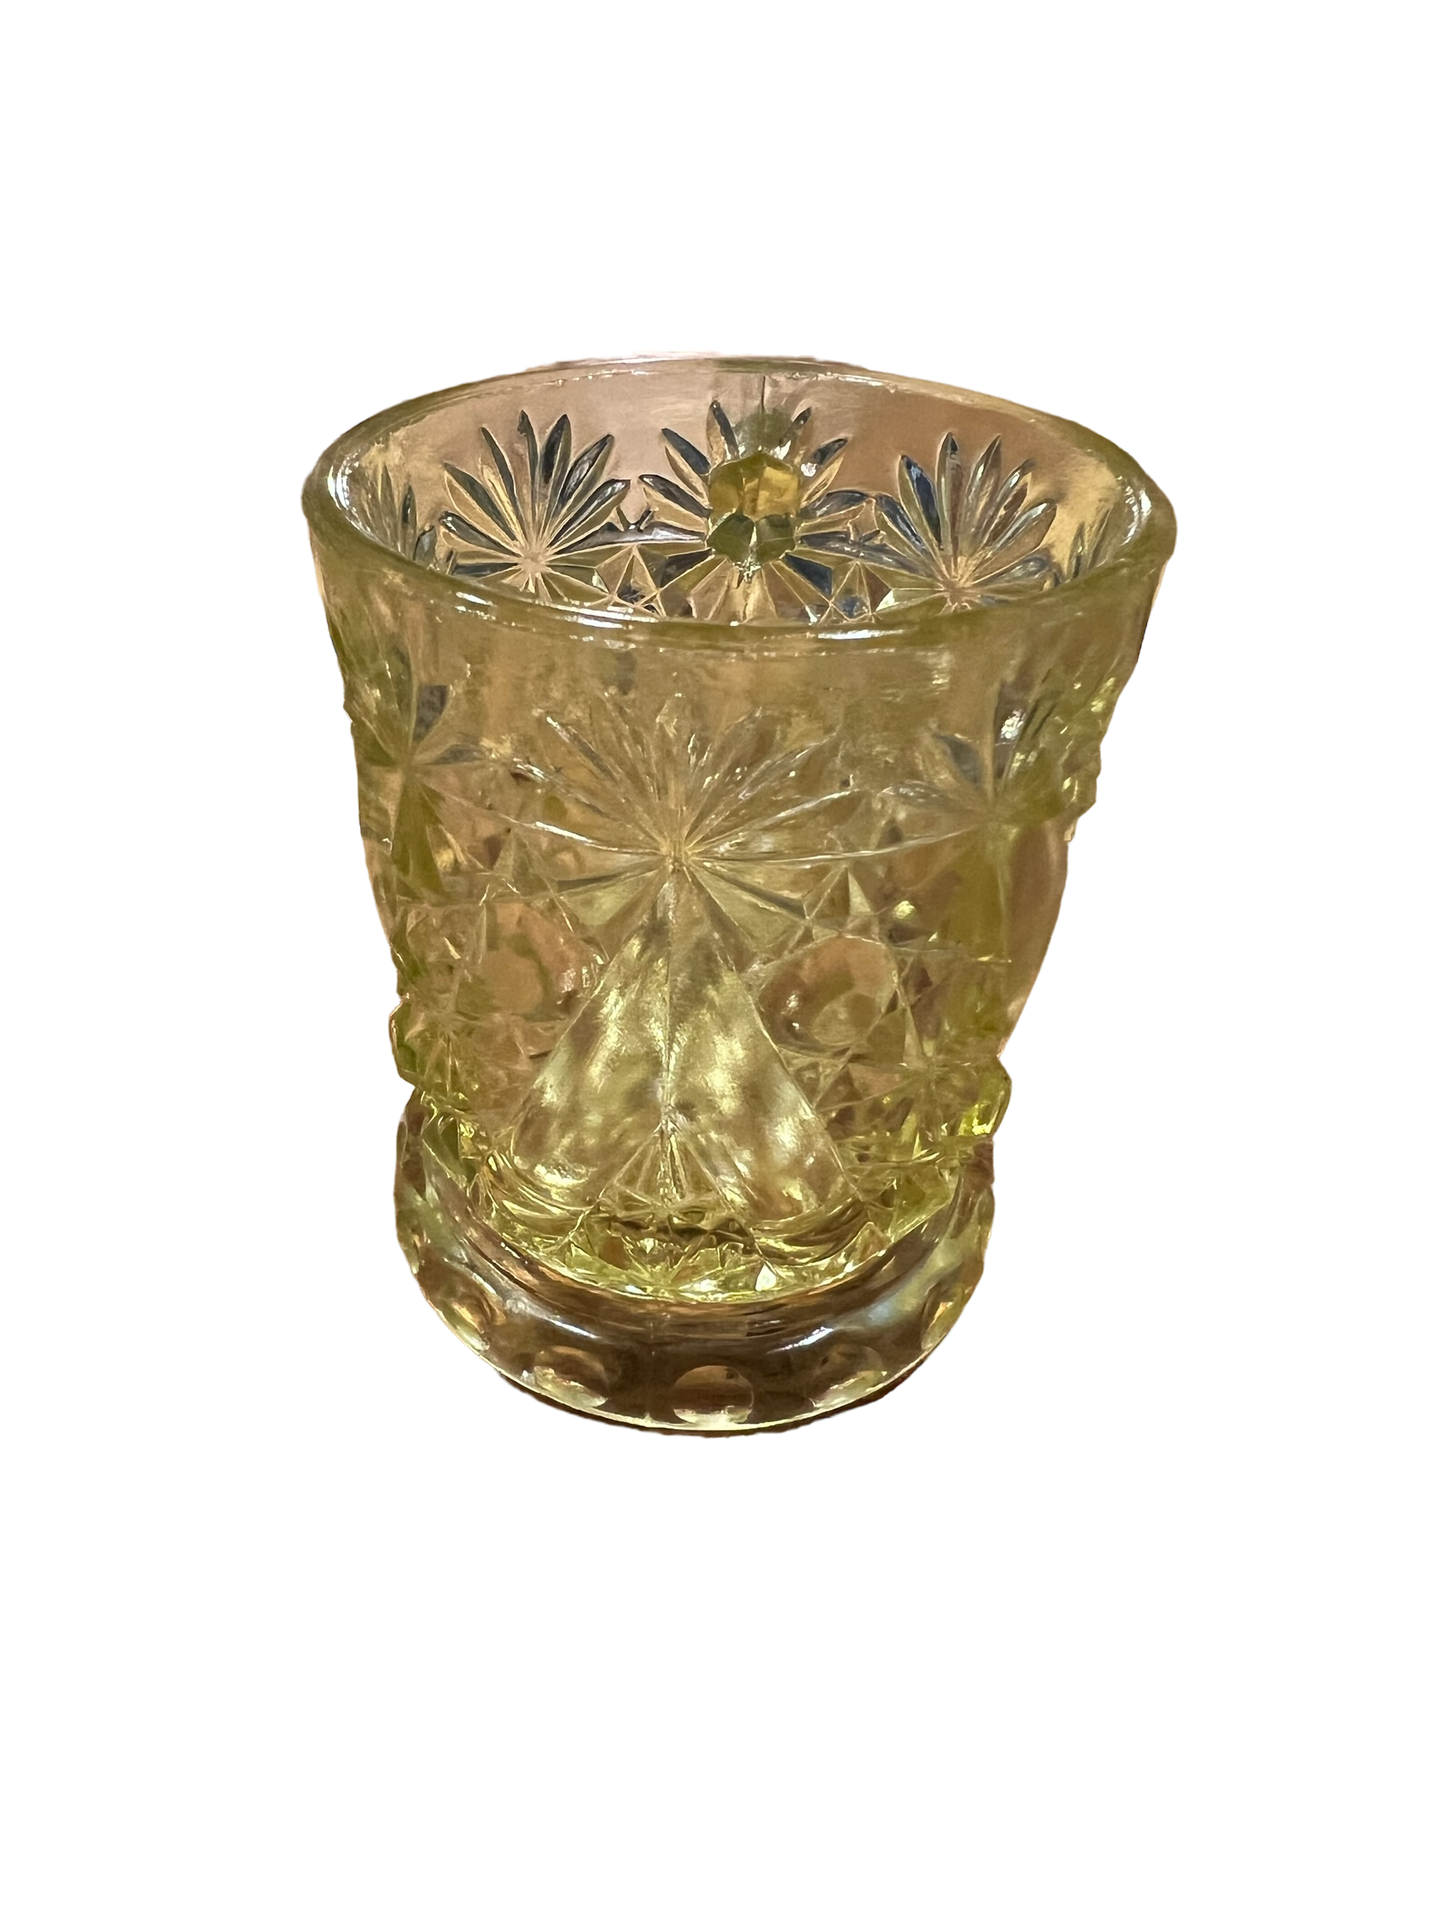 Early Vaseline glass daisy & button child’s mug